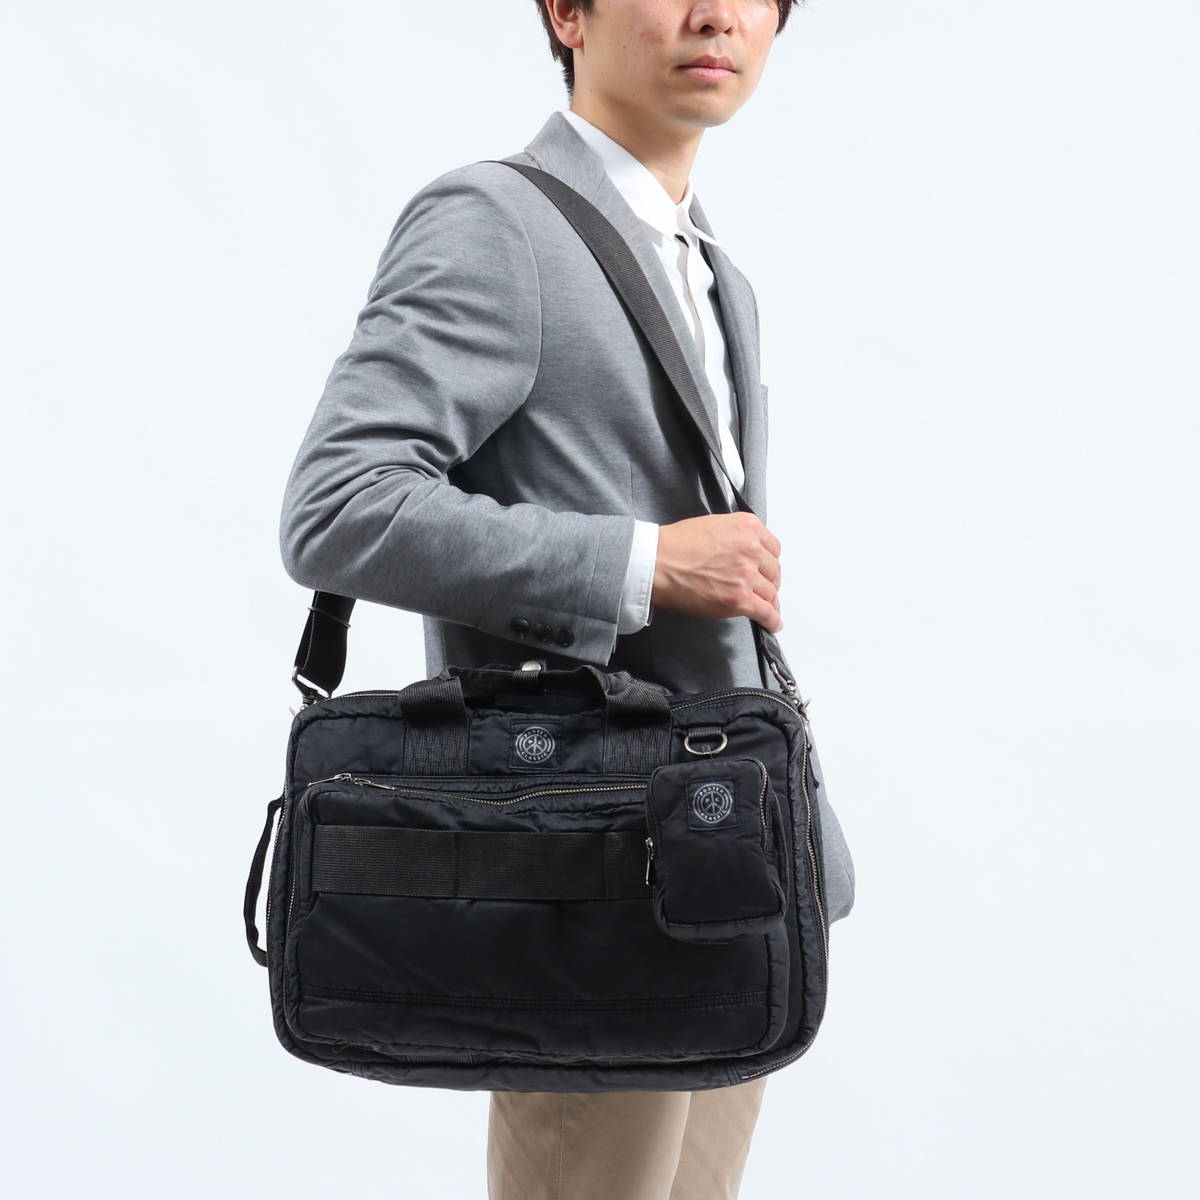 商品説明porter classic supernylon 3way briefcase